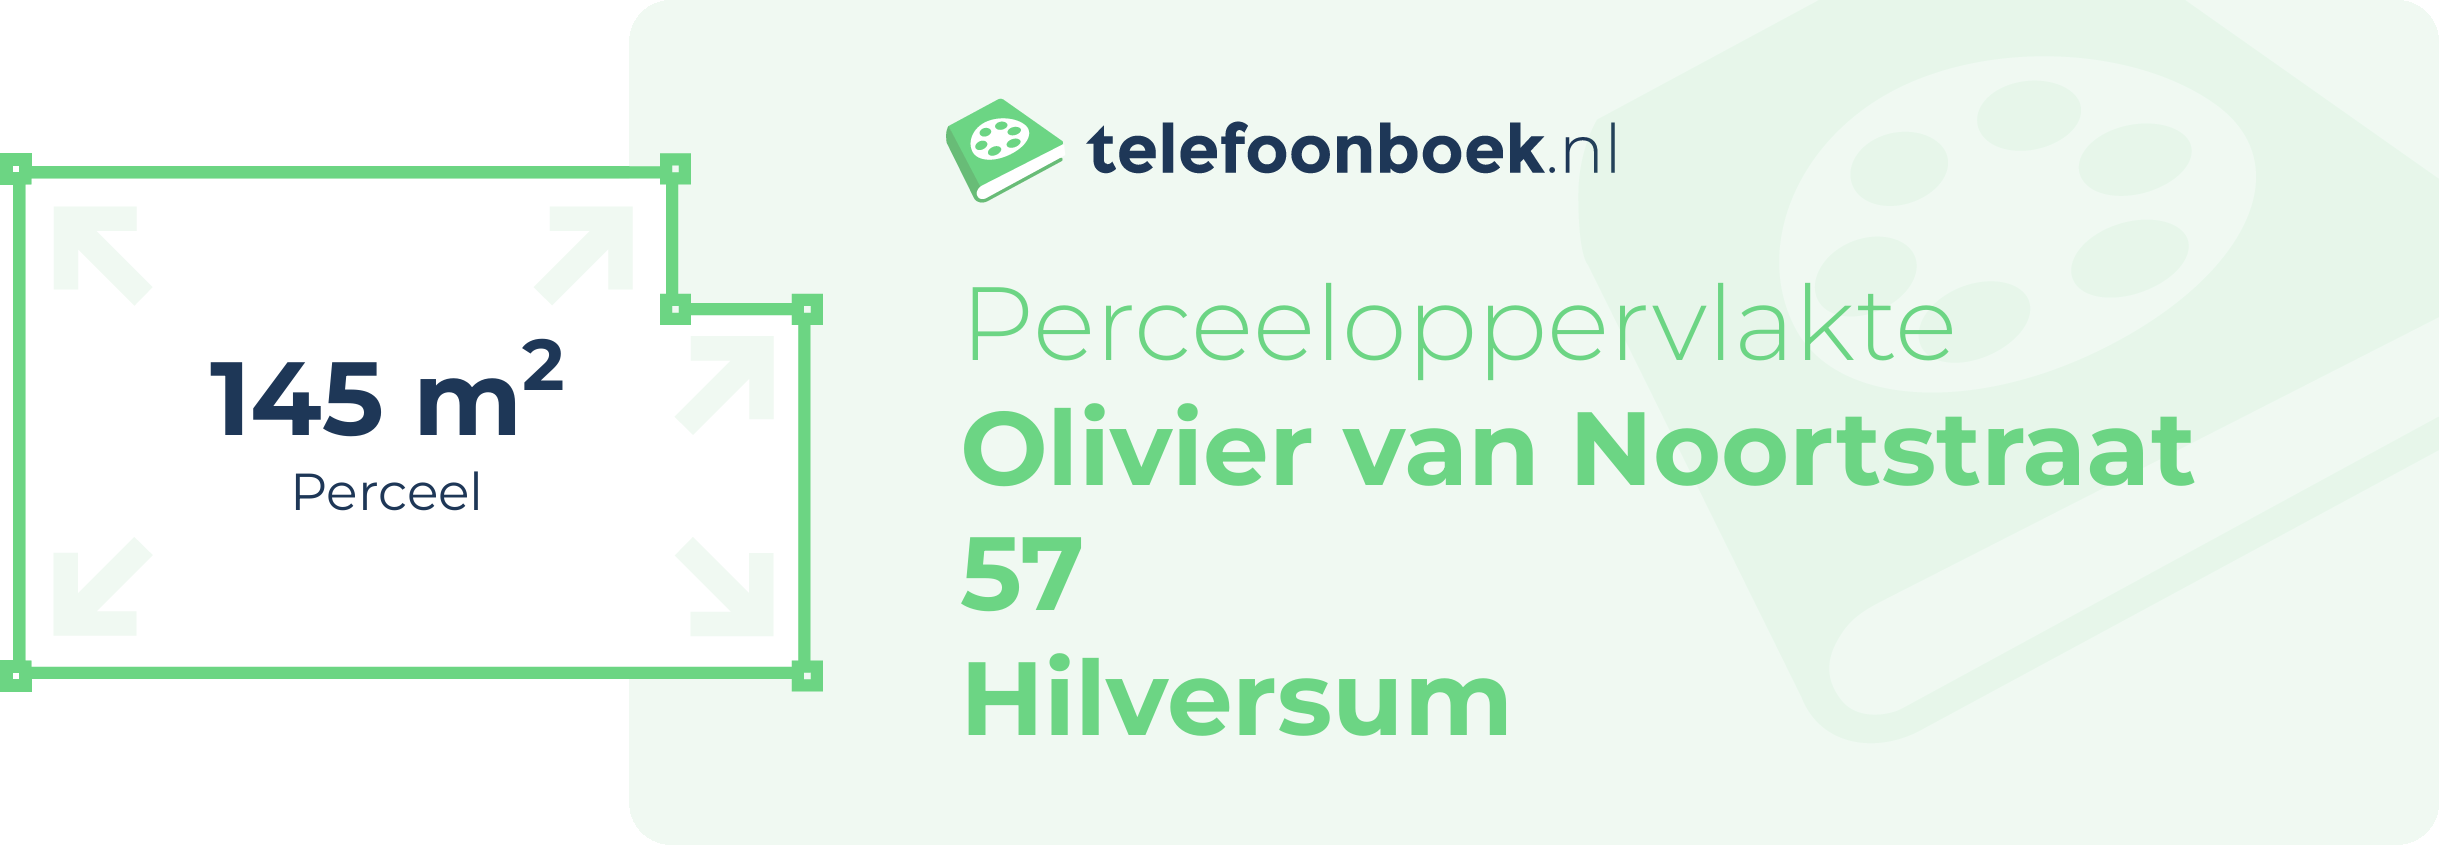 Perceeloppervlakte Olivier Van Noortstraat 57 Hilversum